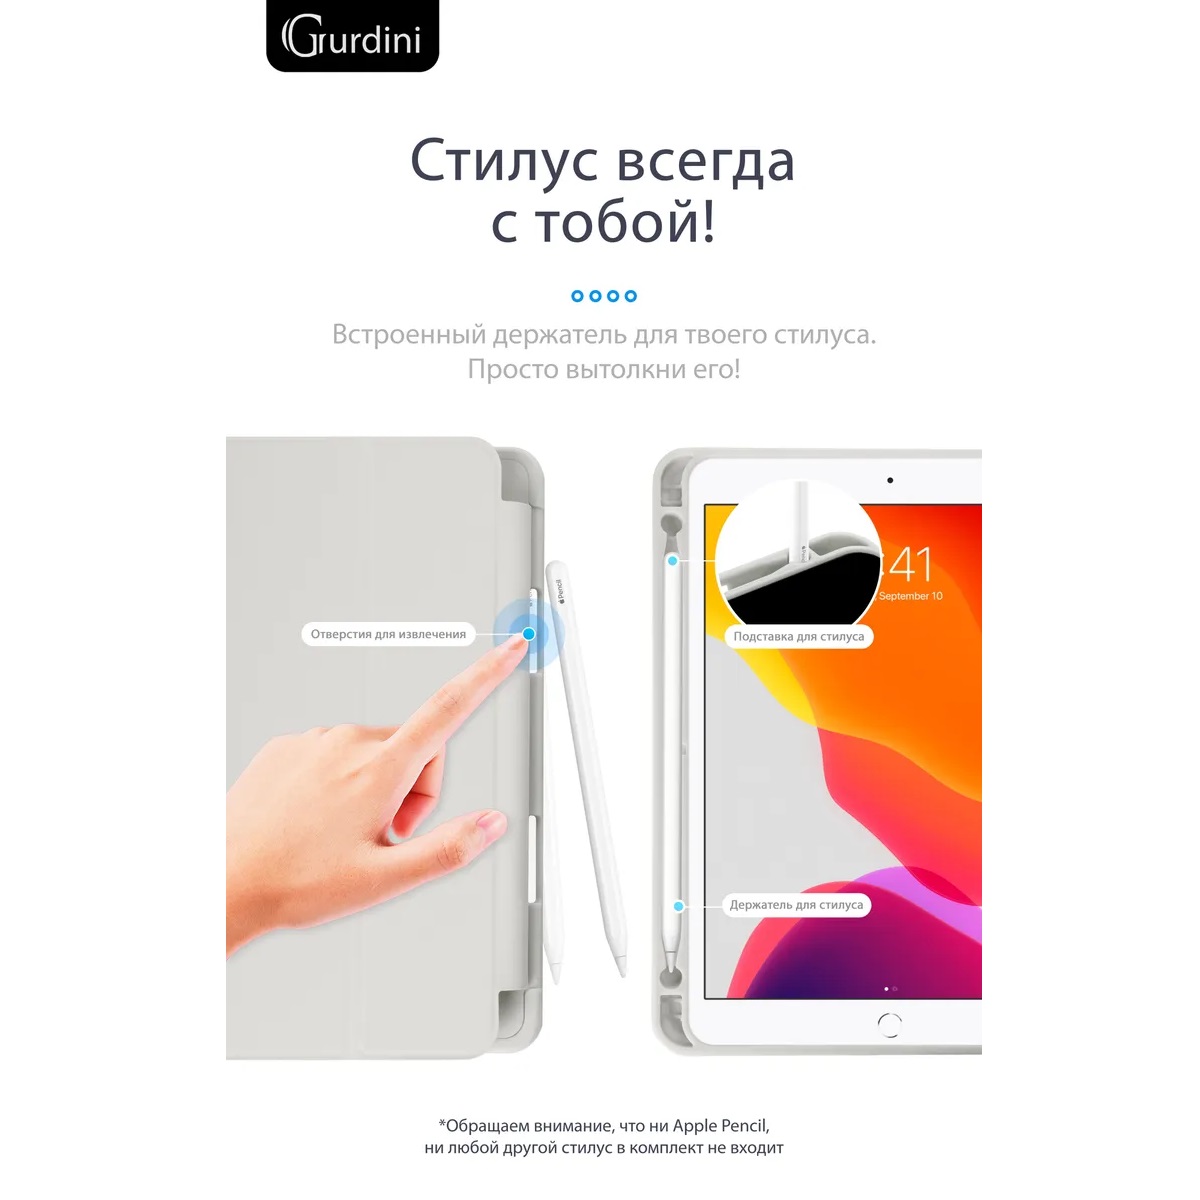 Чехол-книжка Gurdini Milano Series (pen slot) для iPad 10.2 Stone